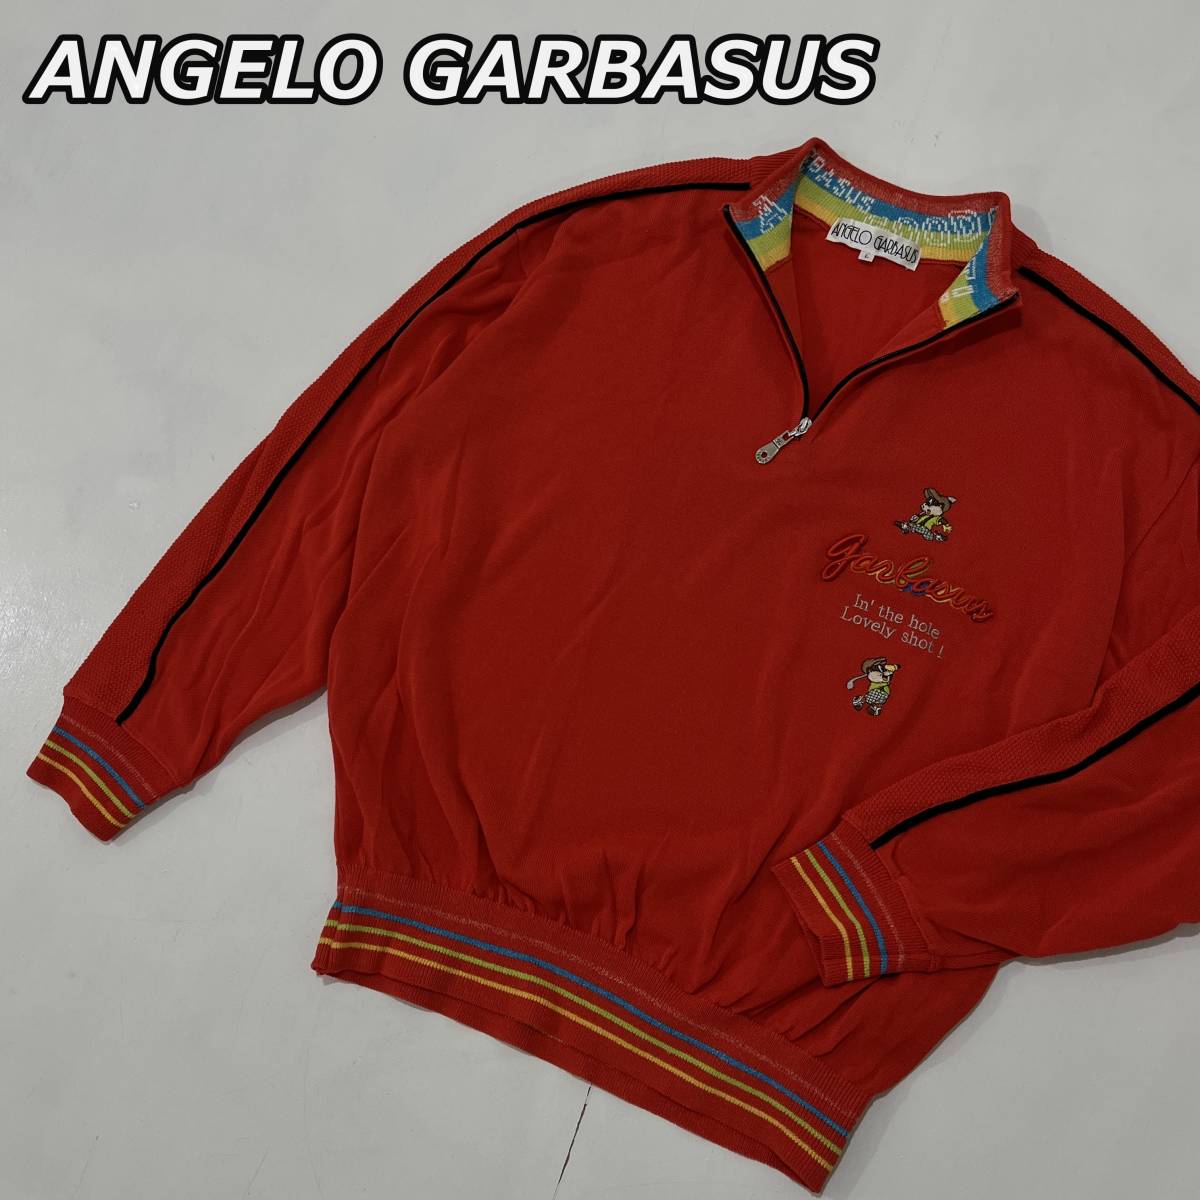 【ANGELO GARBASUS】アンジェロガルバス ロゴ 刺繍 ハーフジップ ニット セーター ゴルフウェア 赤 レッド_画像1